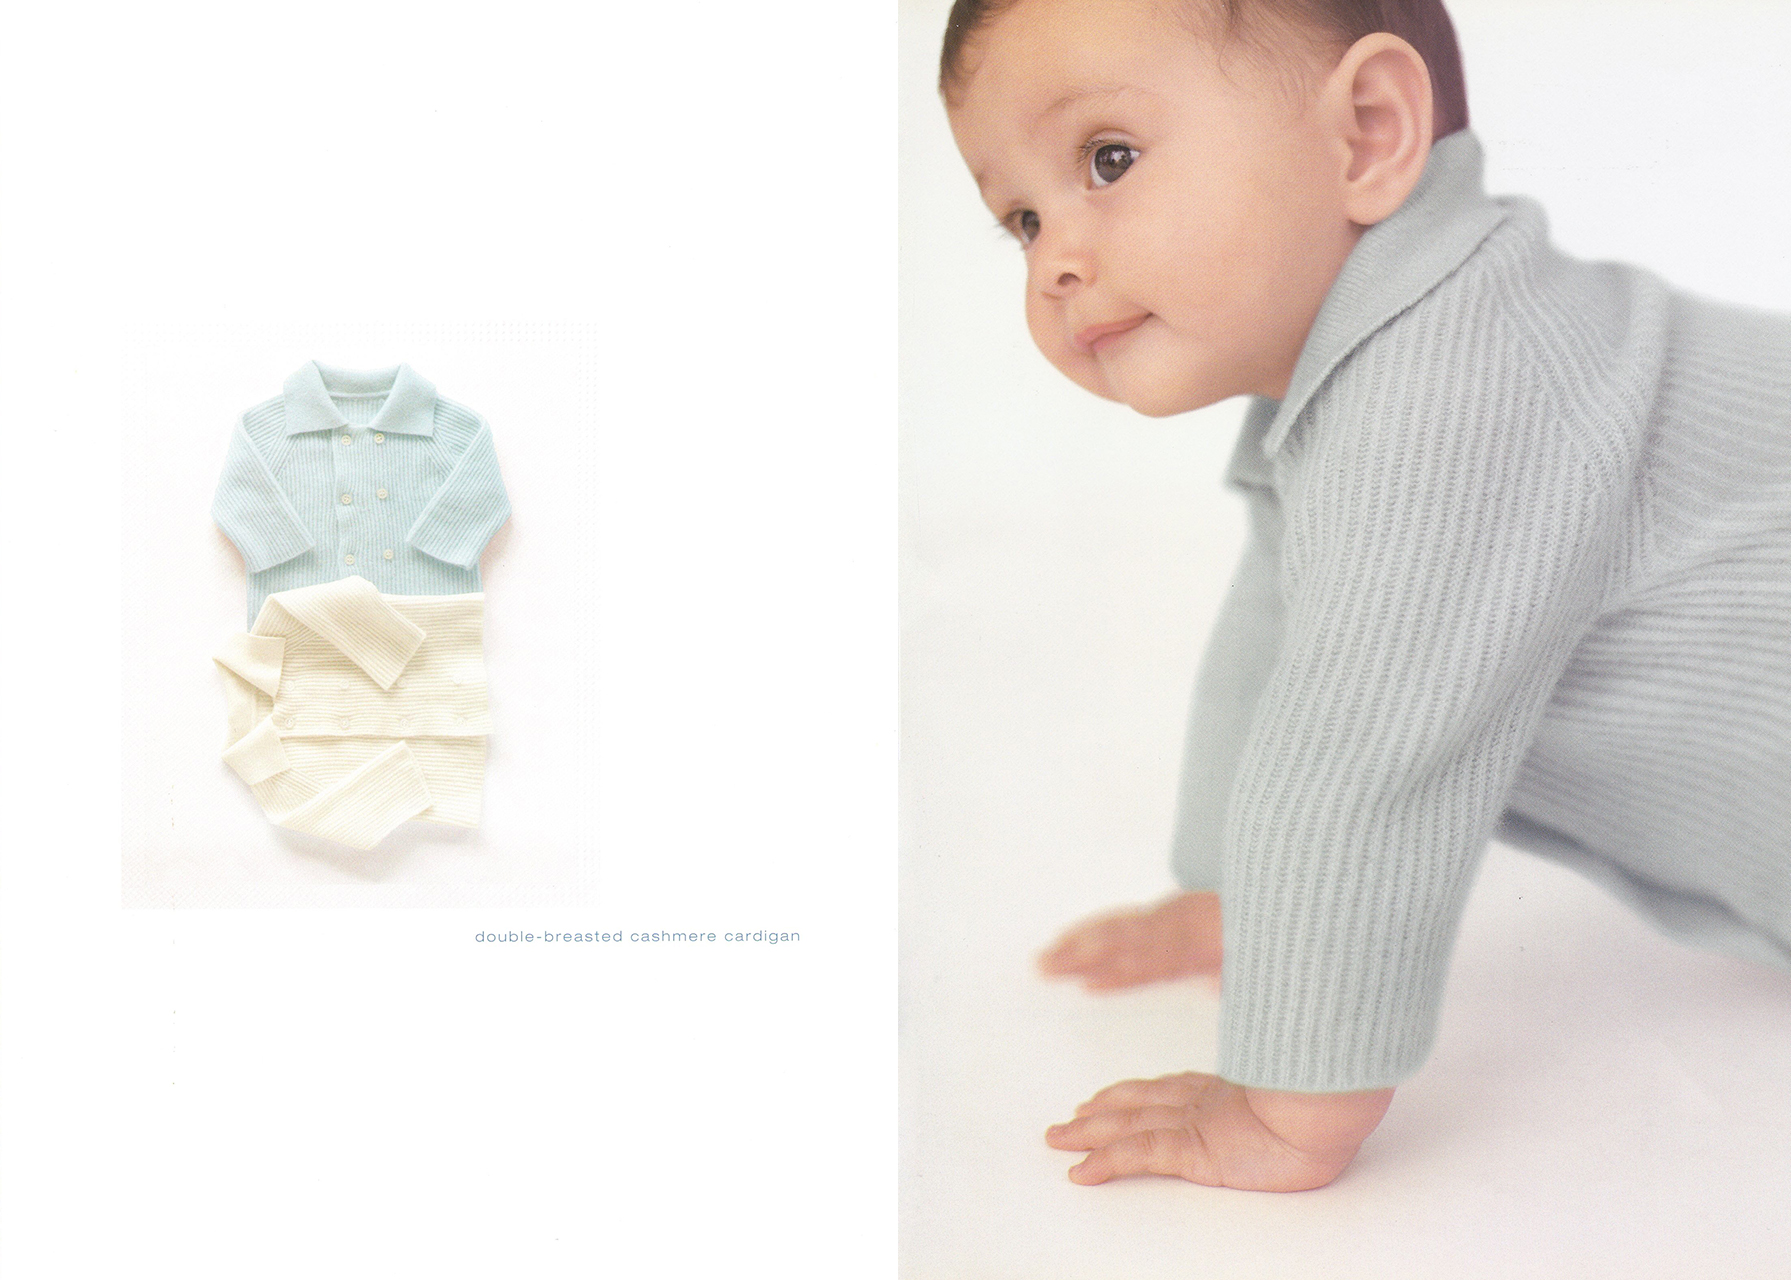 Baby Gap Flint and Kent Alex Bates Design Consulting childrenswear design image